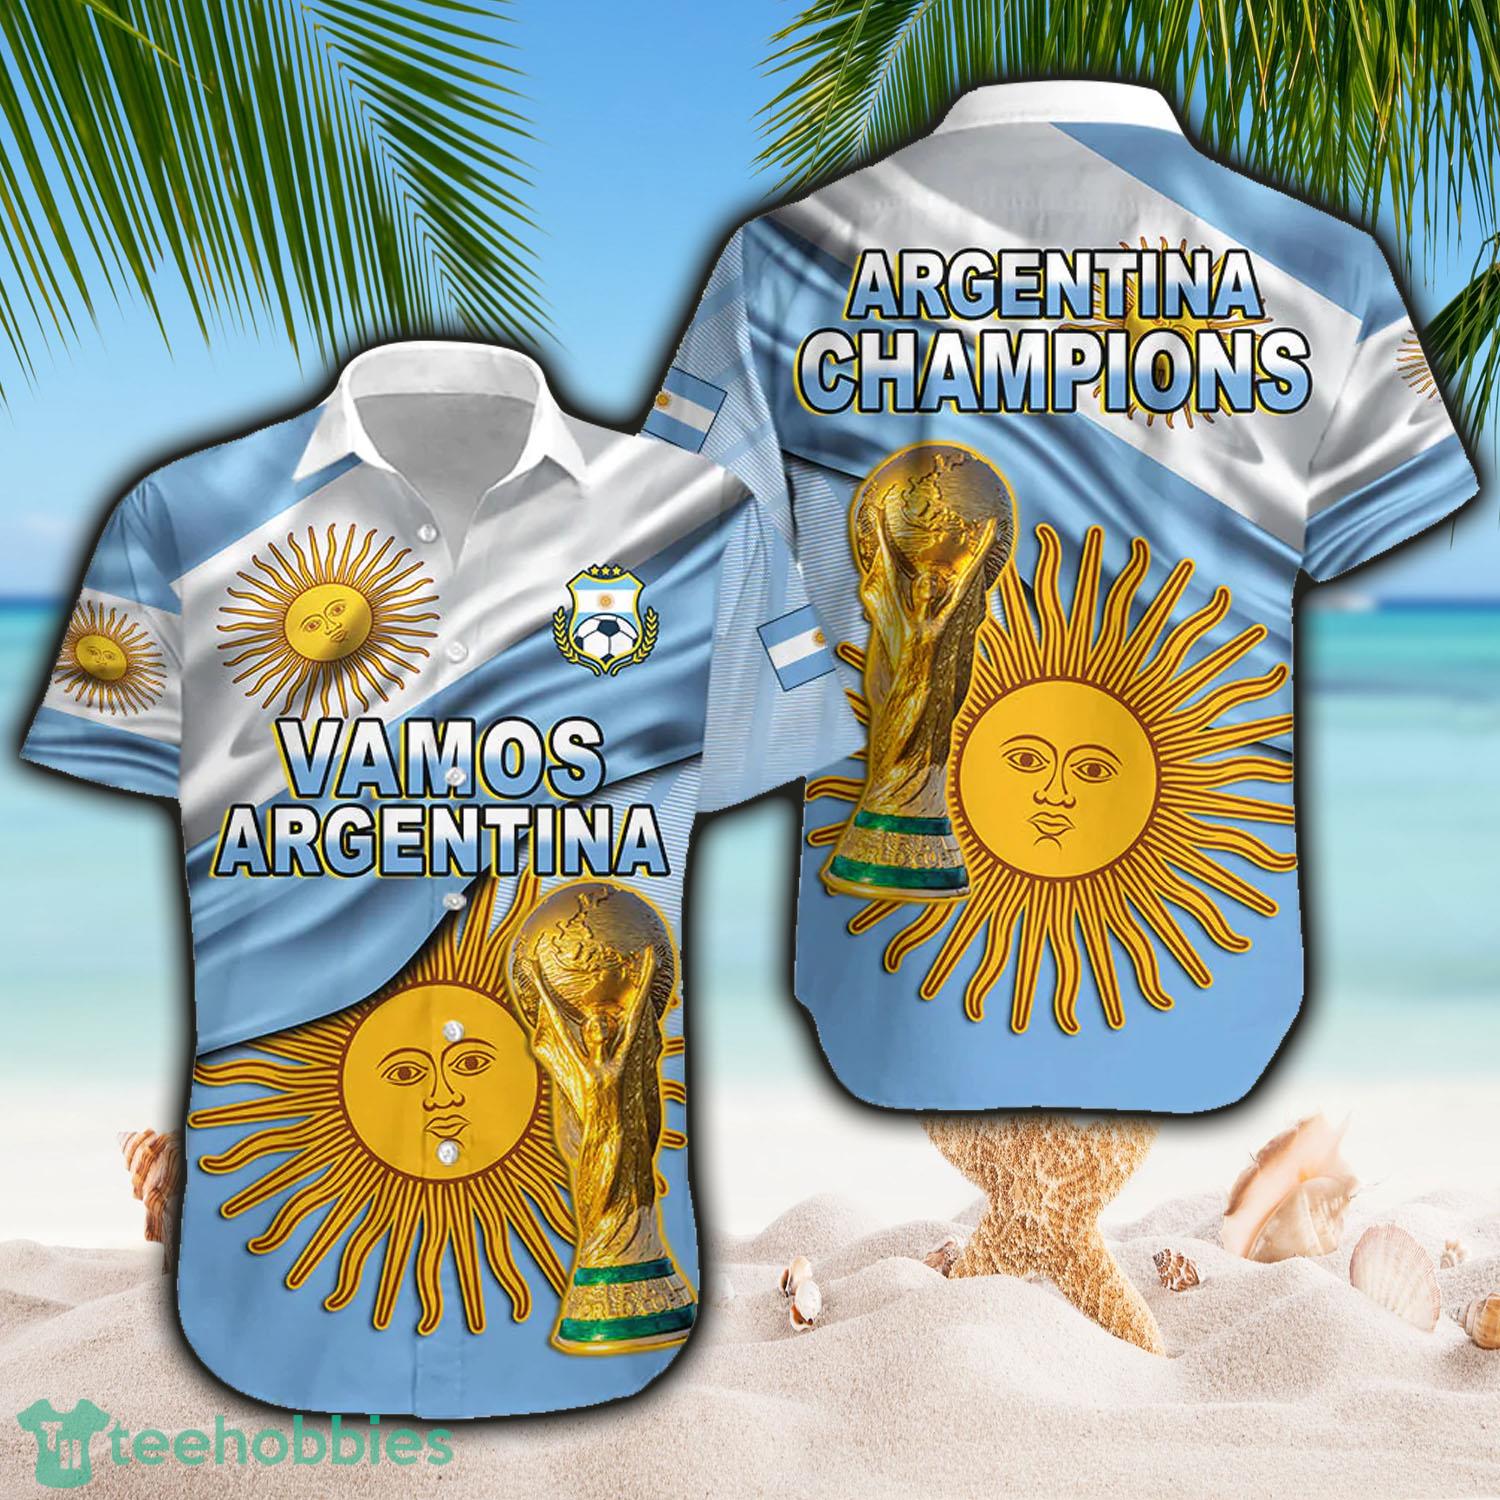 Argentina Football Baseball Champions World Cup Hawaii Shirt - Argentina Football Baseball Champions World Cup Hawaii Shirt